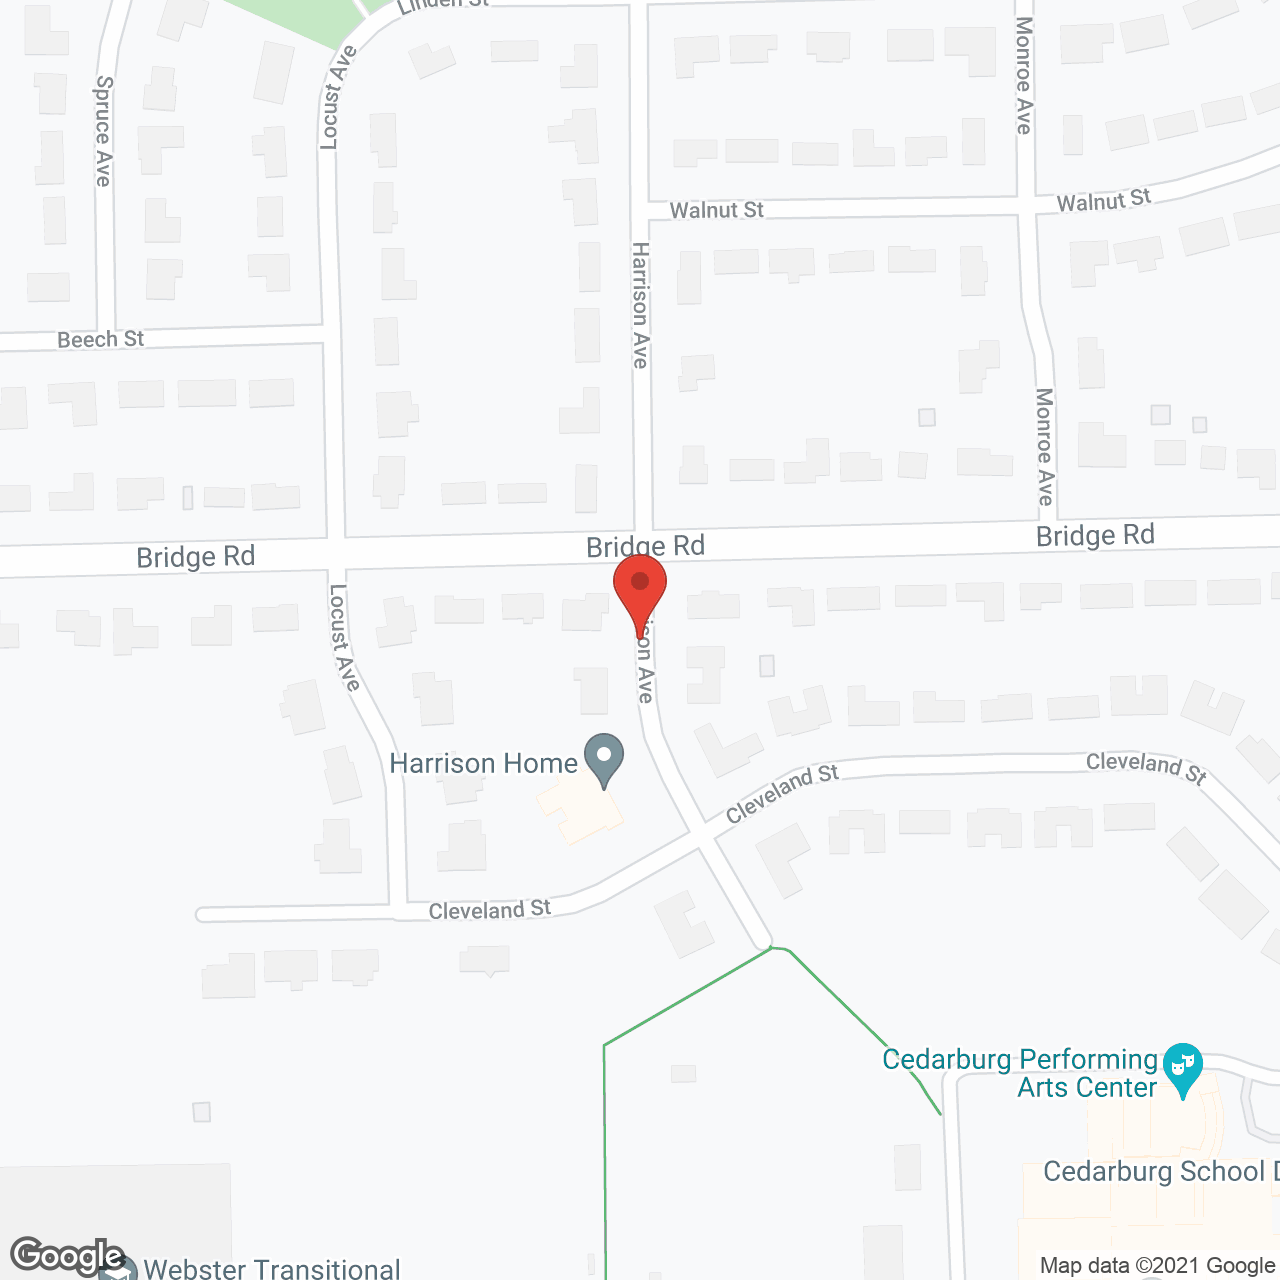 Harrison Home in google map